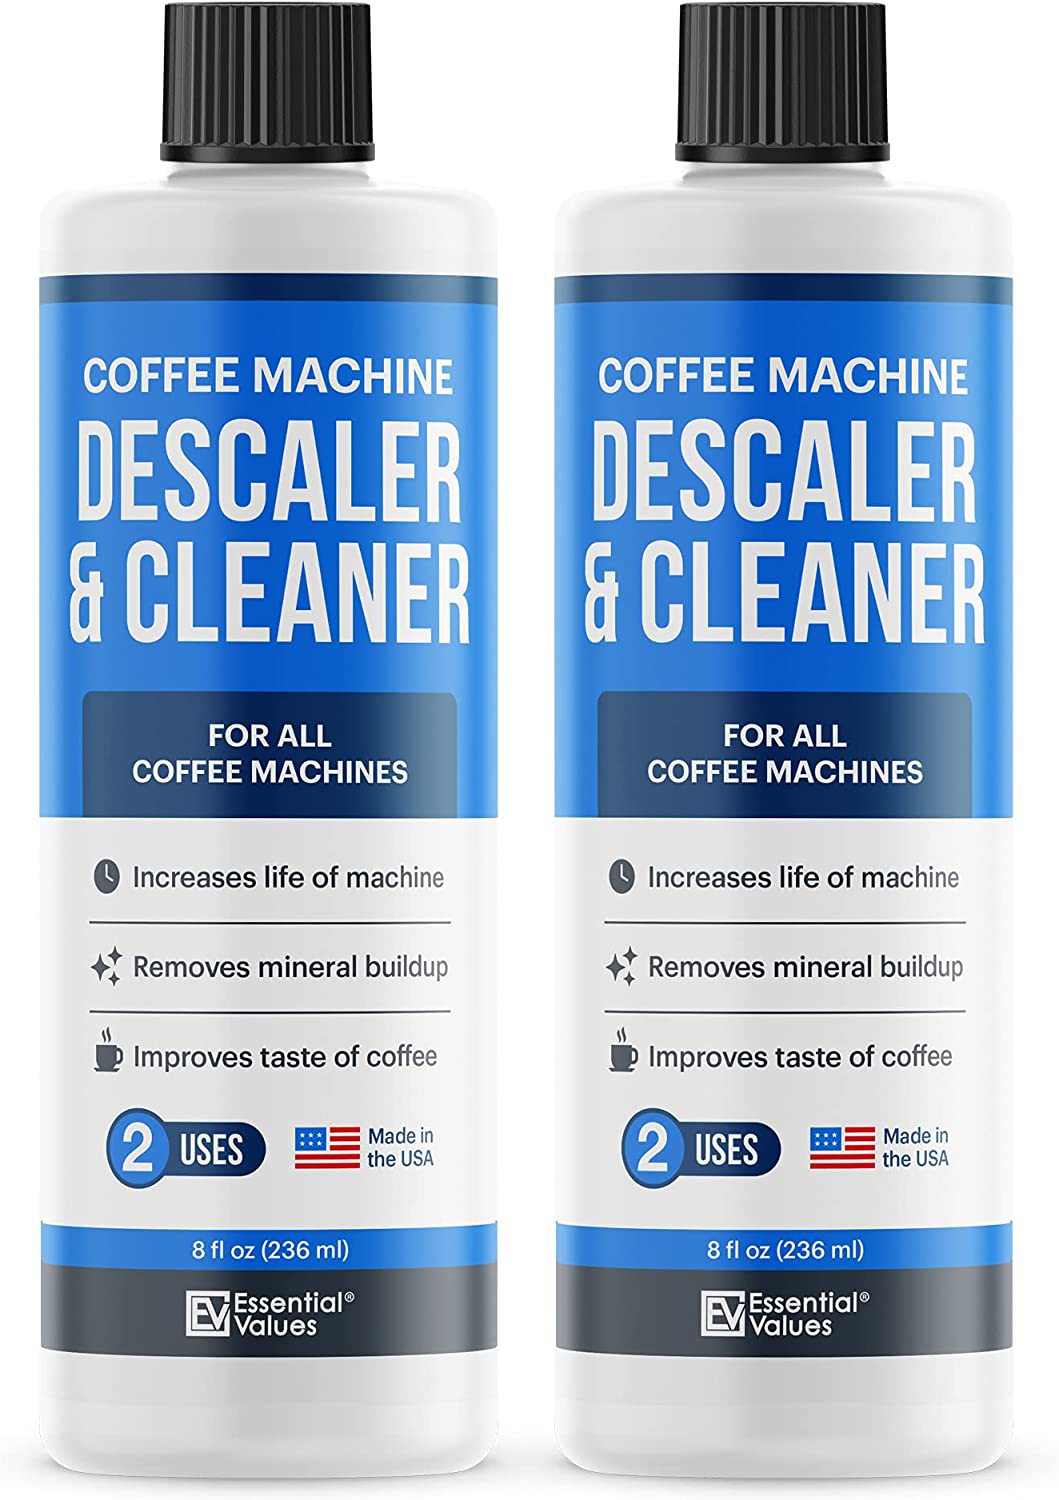 Melitta Anti Calc Descaling Powder For Fully Automatic Espresso Machin –  Xtra Wholsesale Ltd